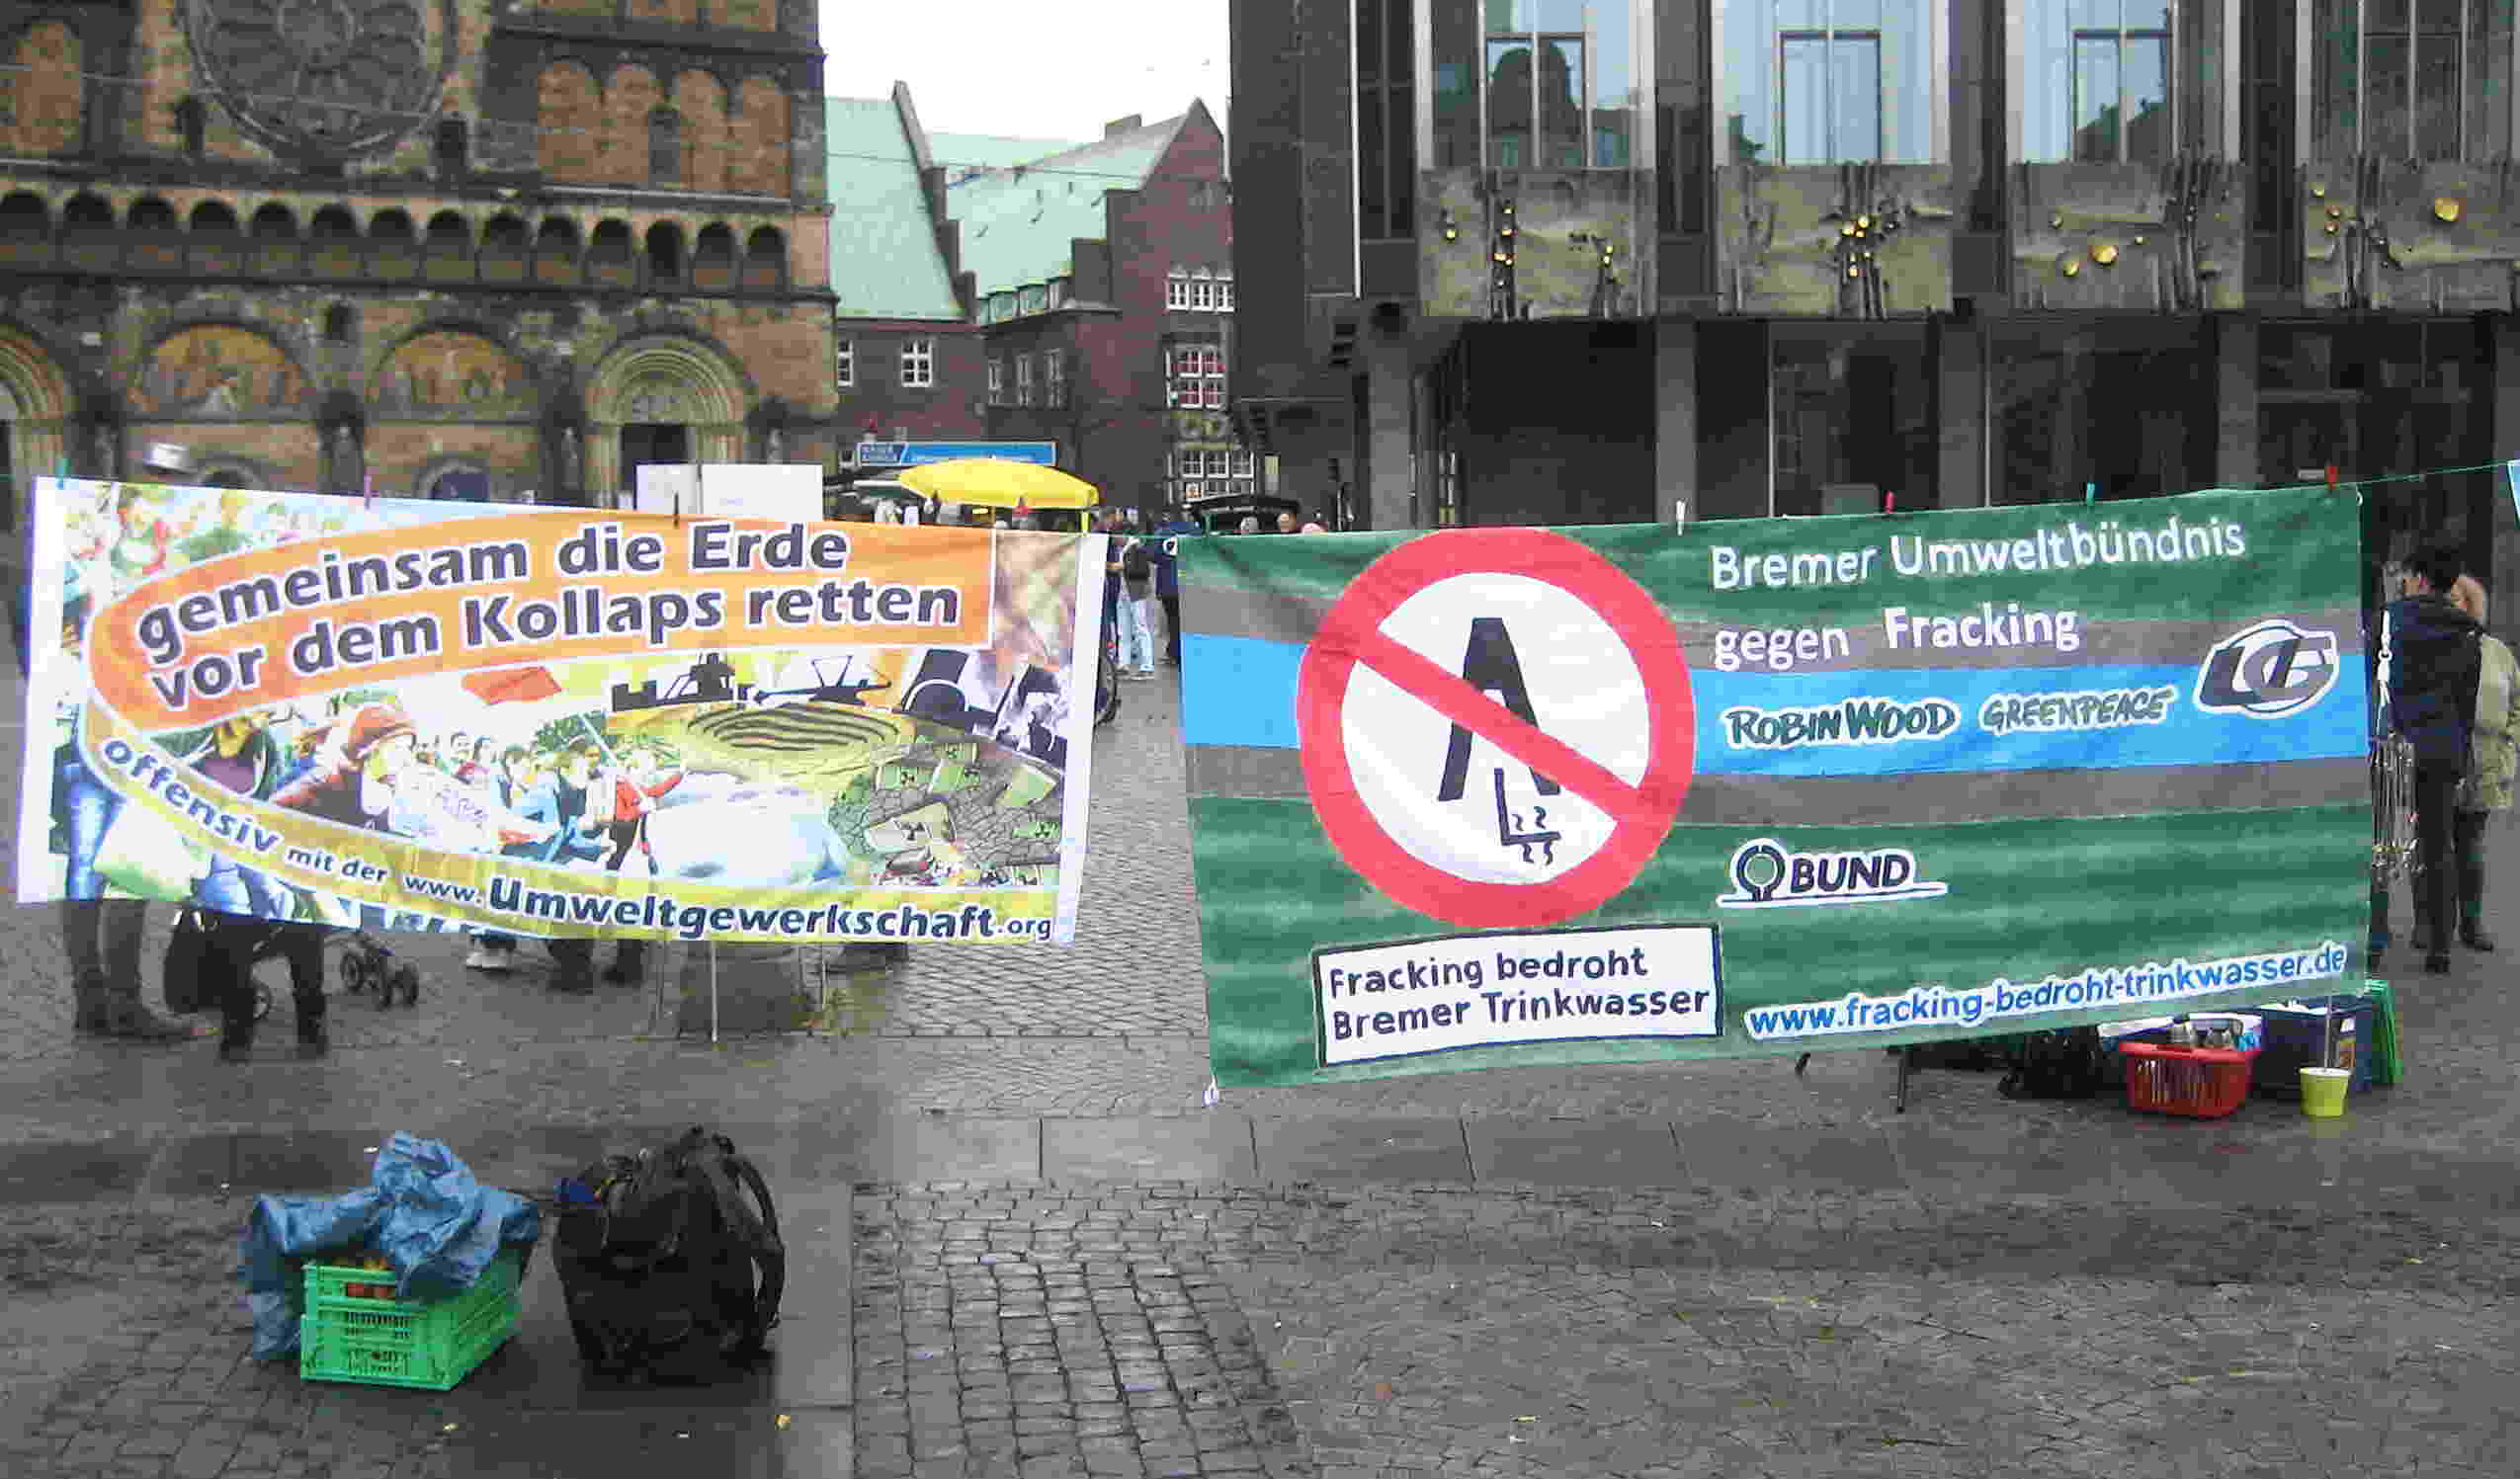 Transparente der 'Umweltgewerkschaft' und des 
'Bremer Umweltbündnisses gegen Fracking'